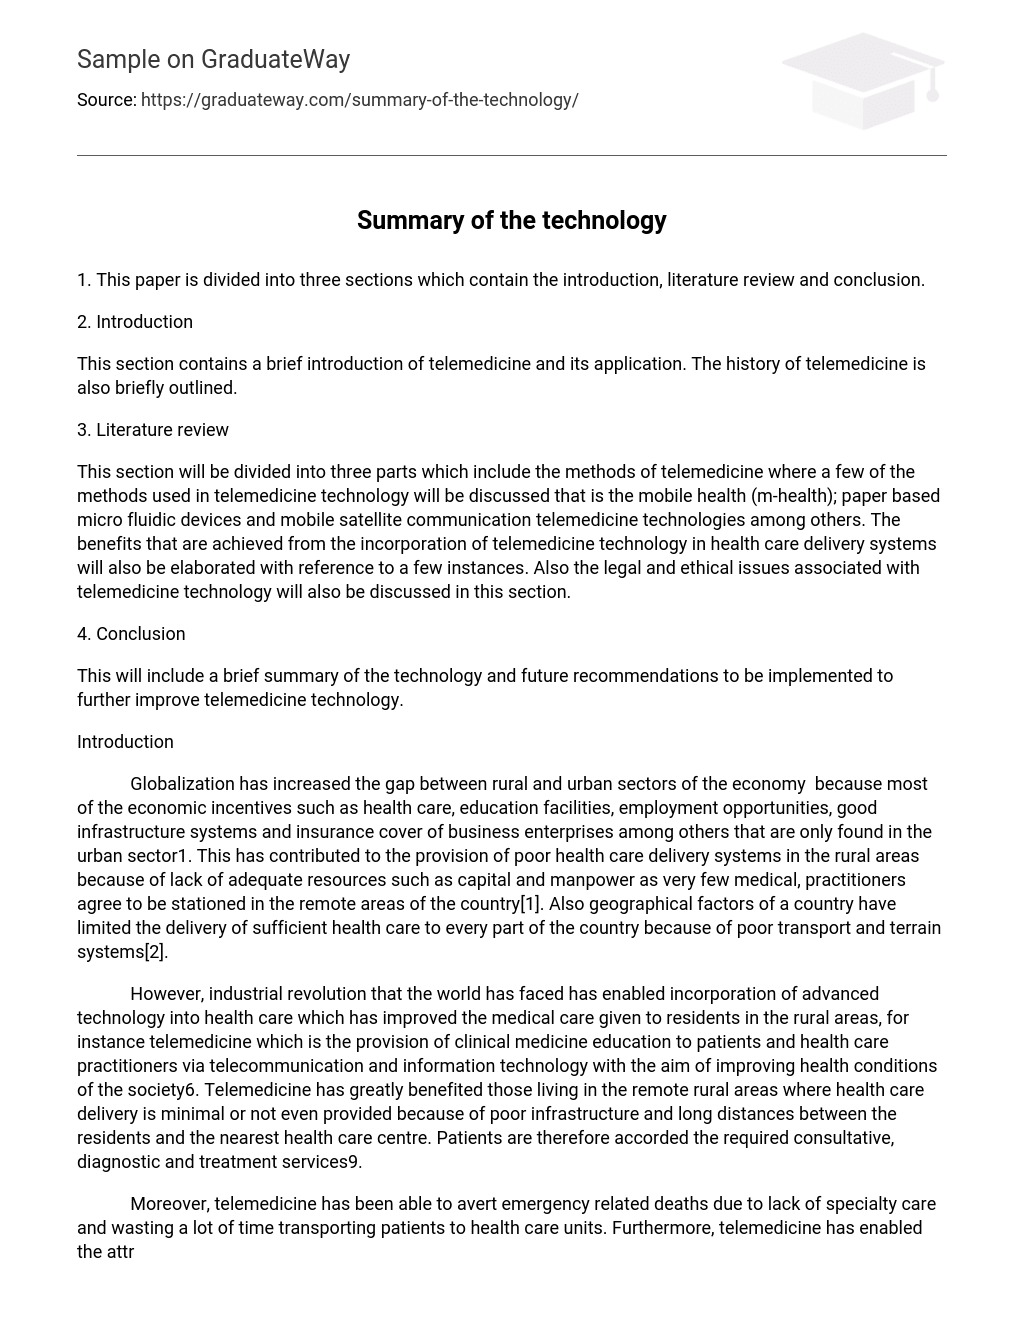 Summary of the technology